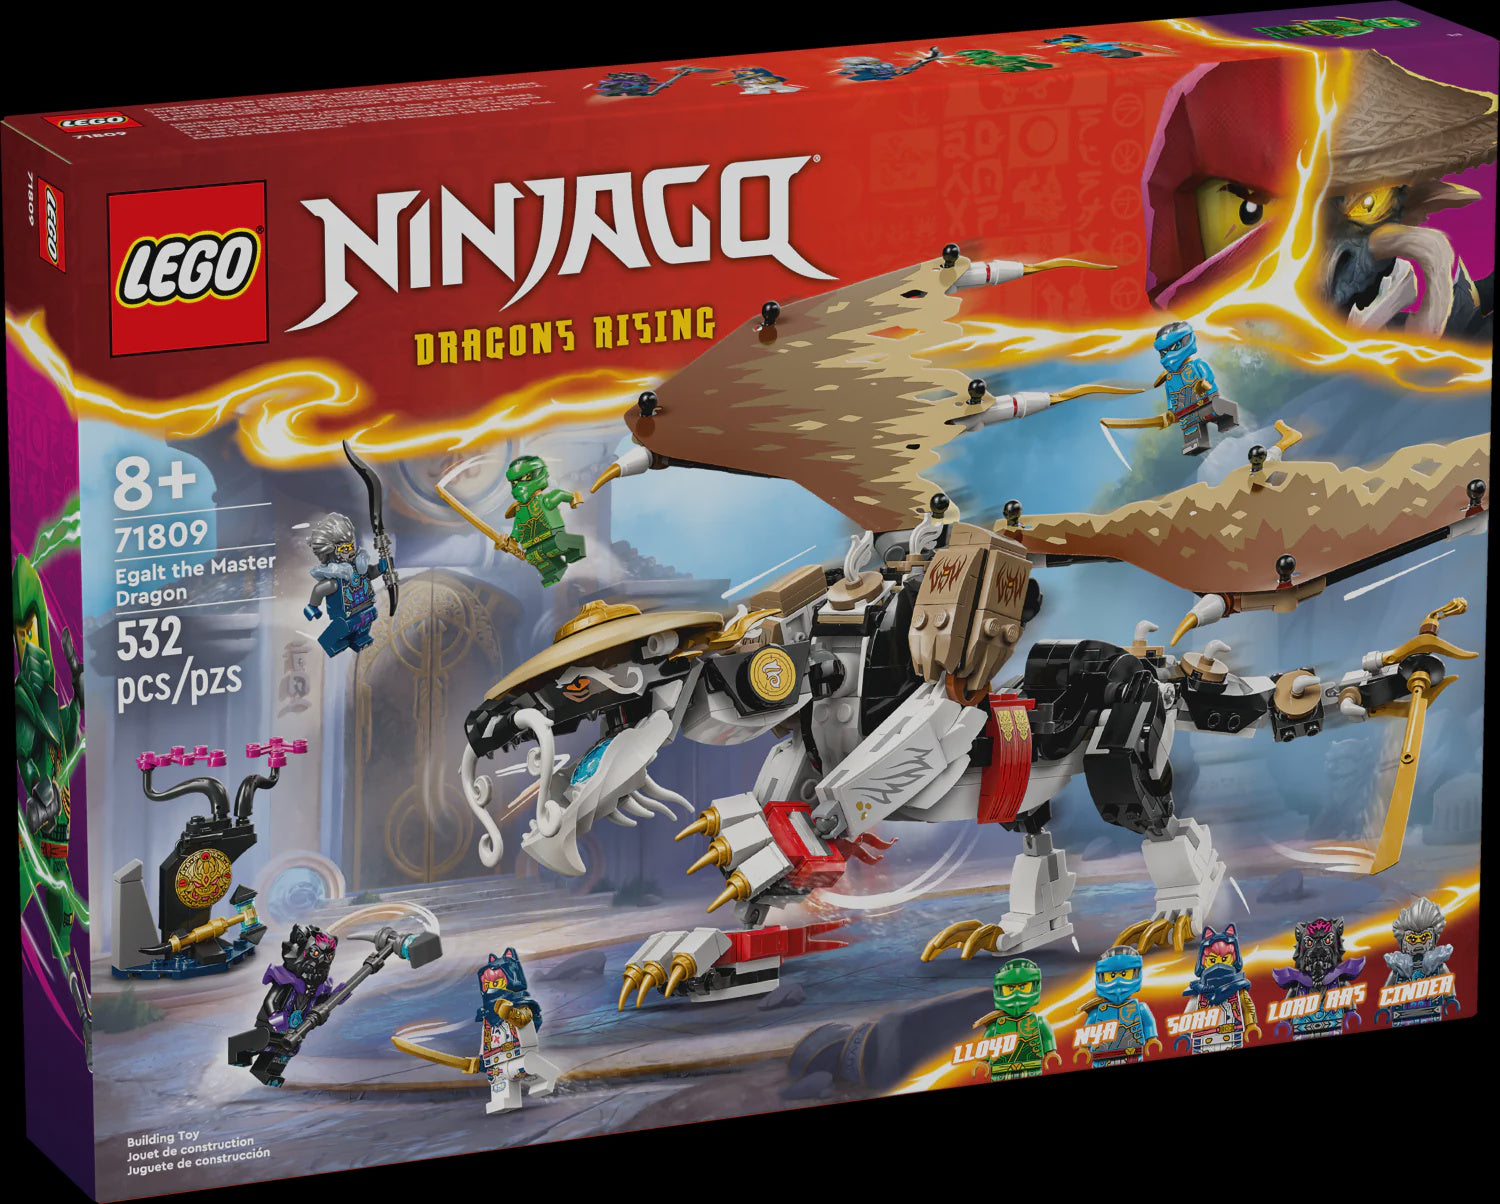 Lego Ninjago: Egalt the Master Dragon 71809